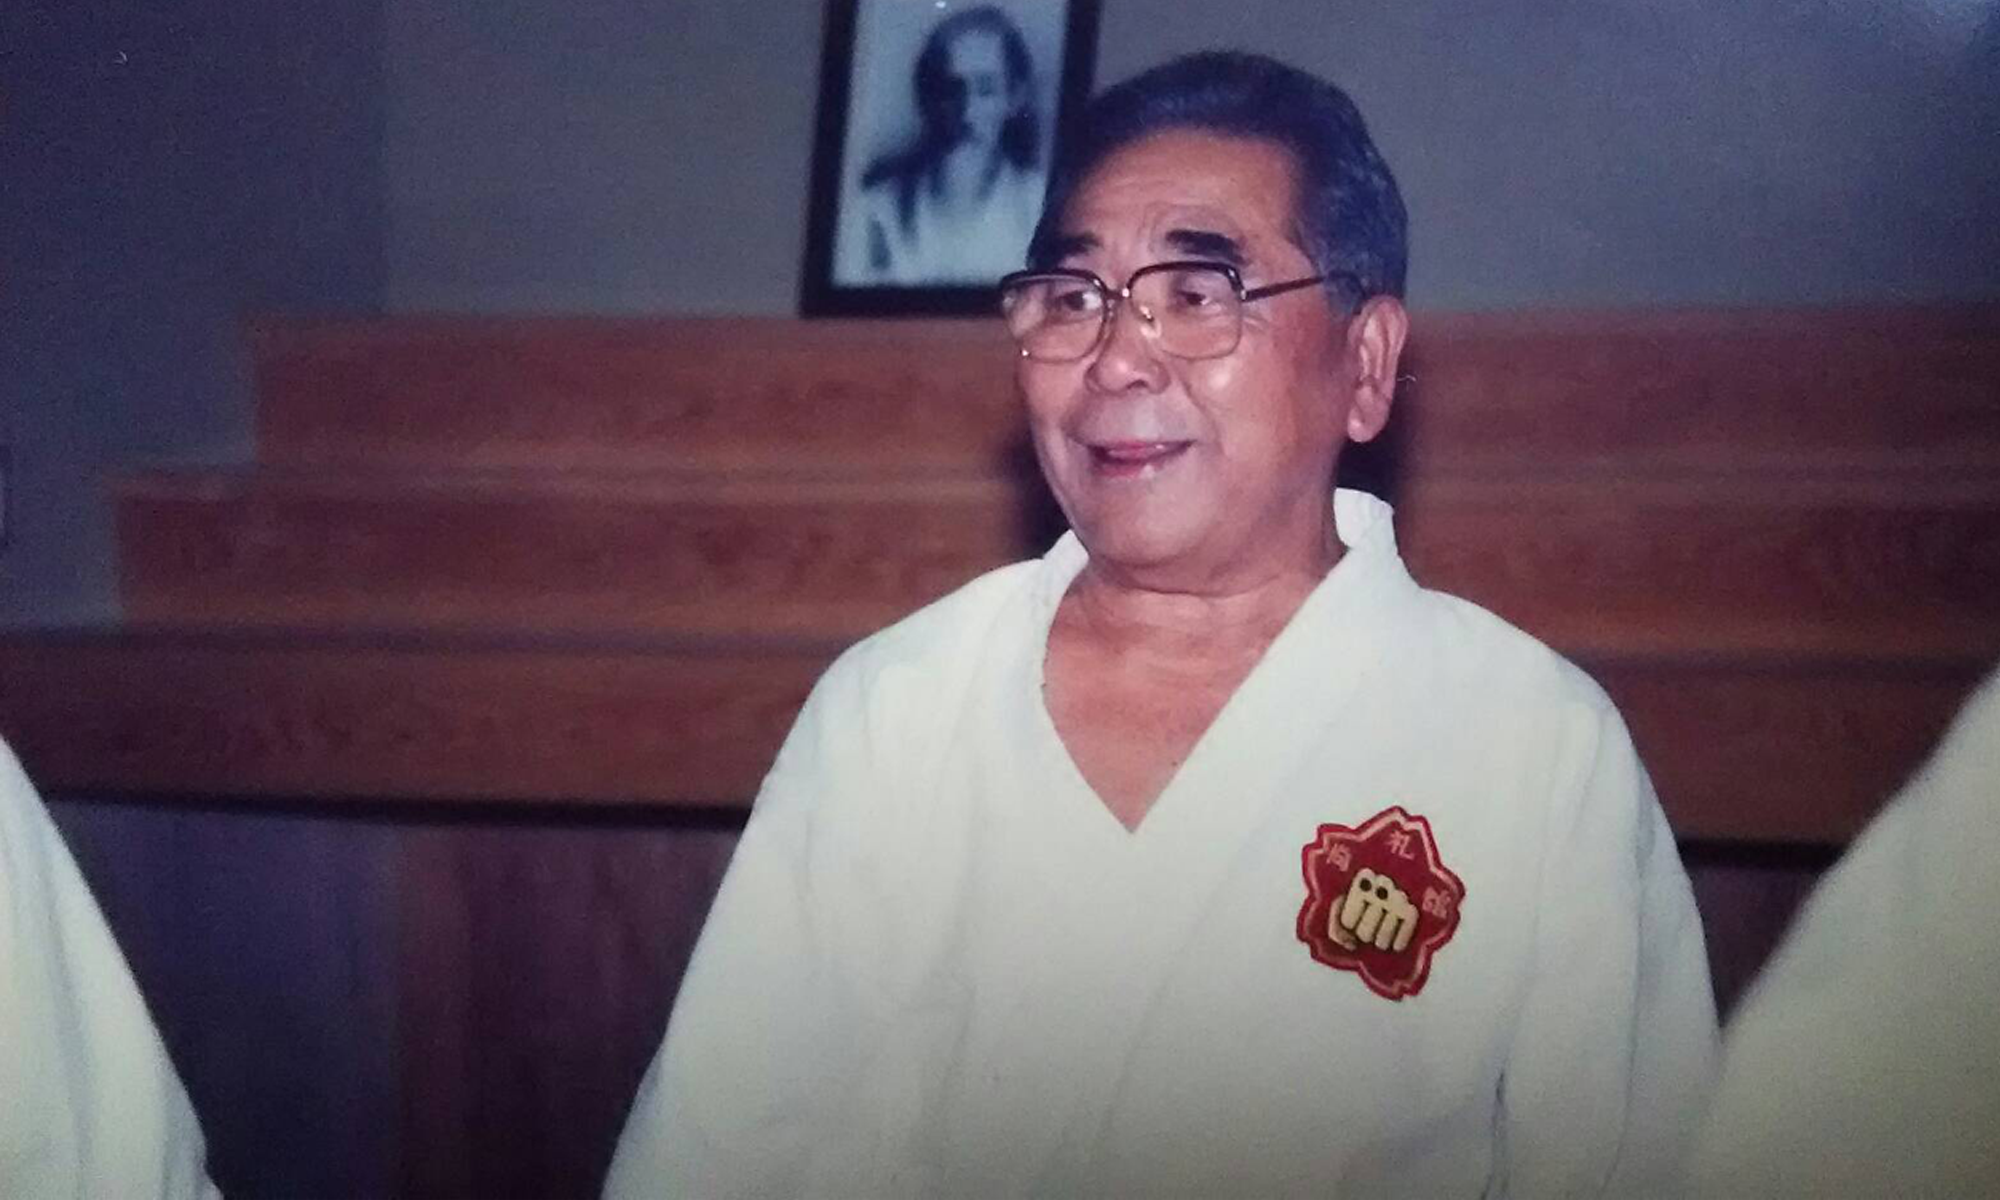 A look into the past – a video of Master Toguchi at the Nakano Shoreikan Dojo (from MX TV)